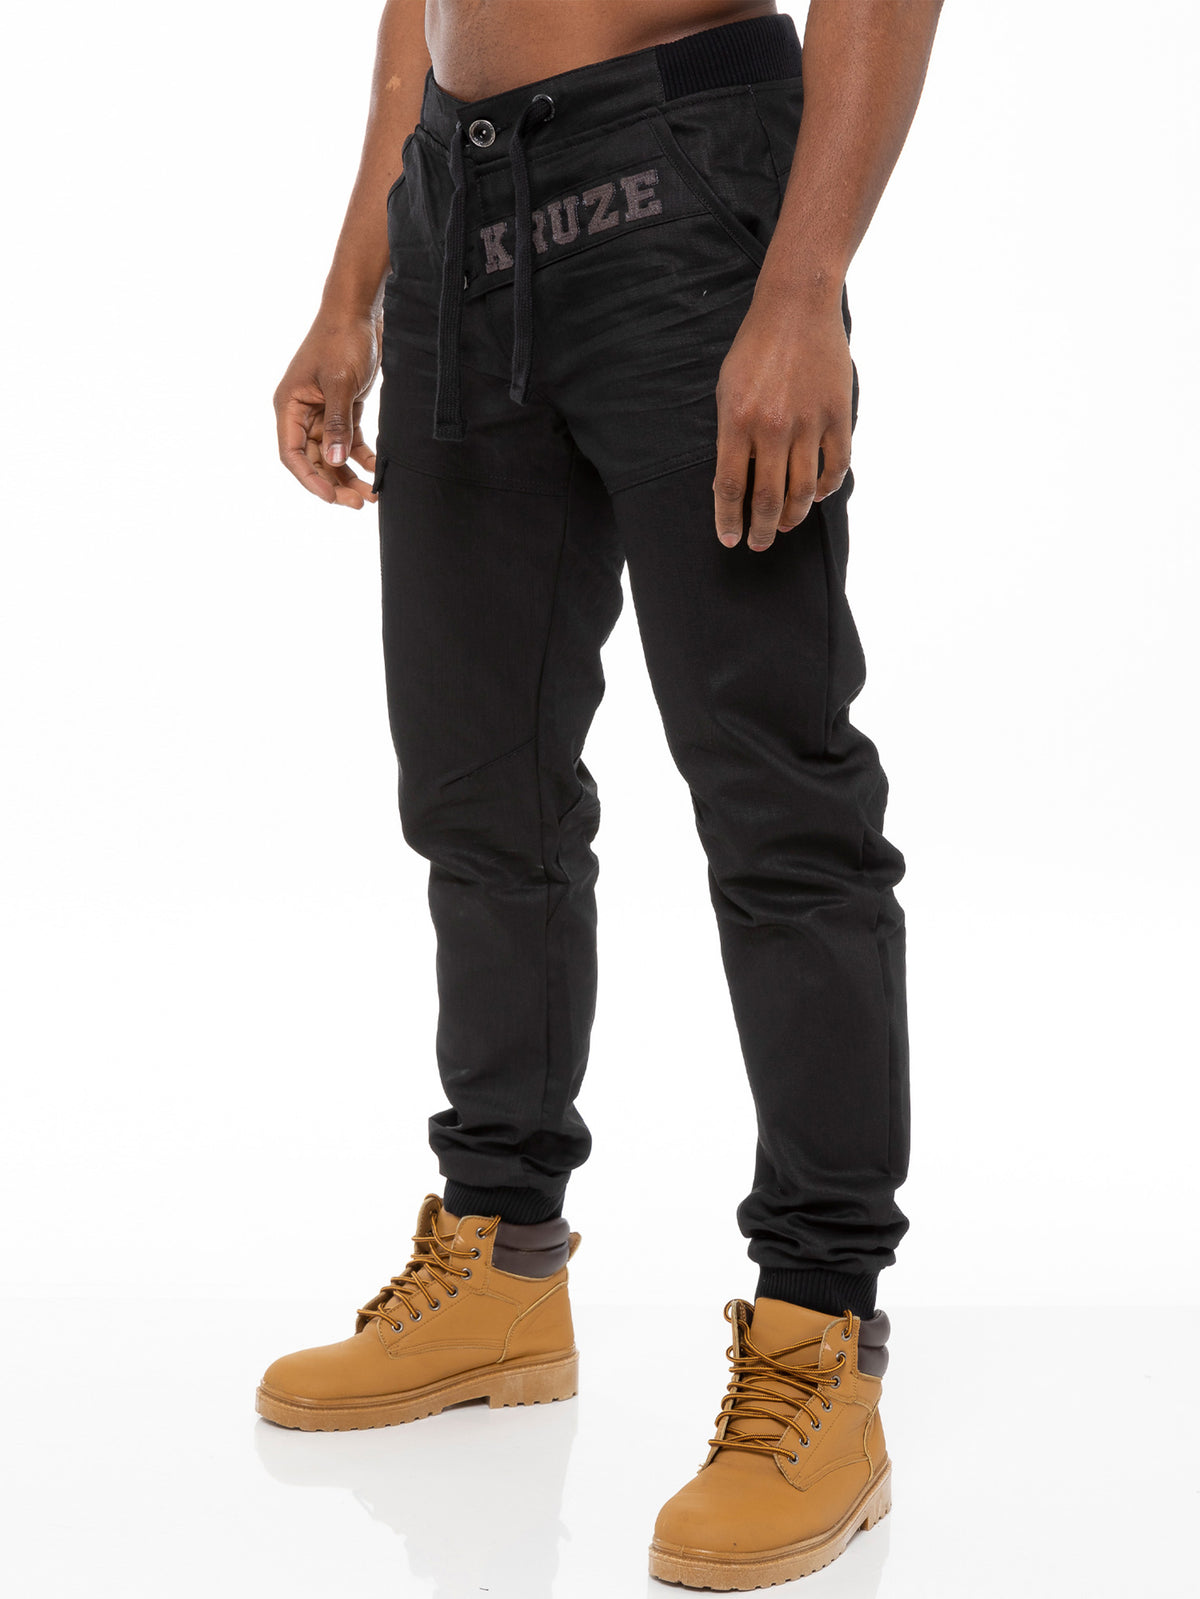 KZ101 KRUZE Mens Designer Casual Mid Stonewash Branded Denim Cuffed Jeans Pants KRUZE RAWDENIM